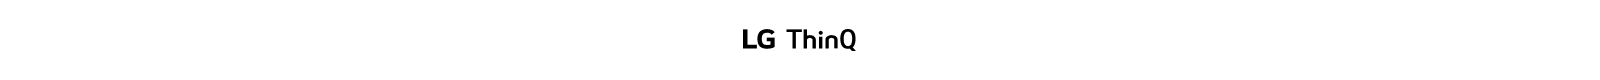 LG ThinQ 標誌